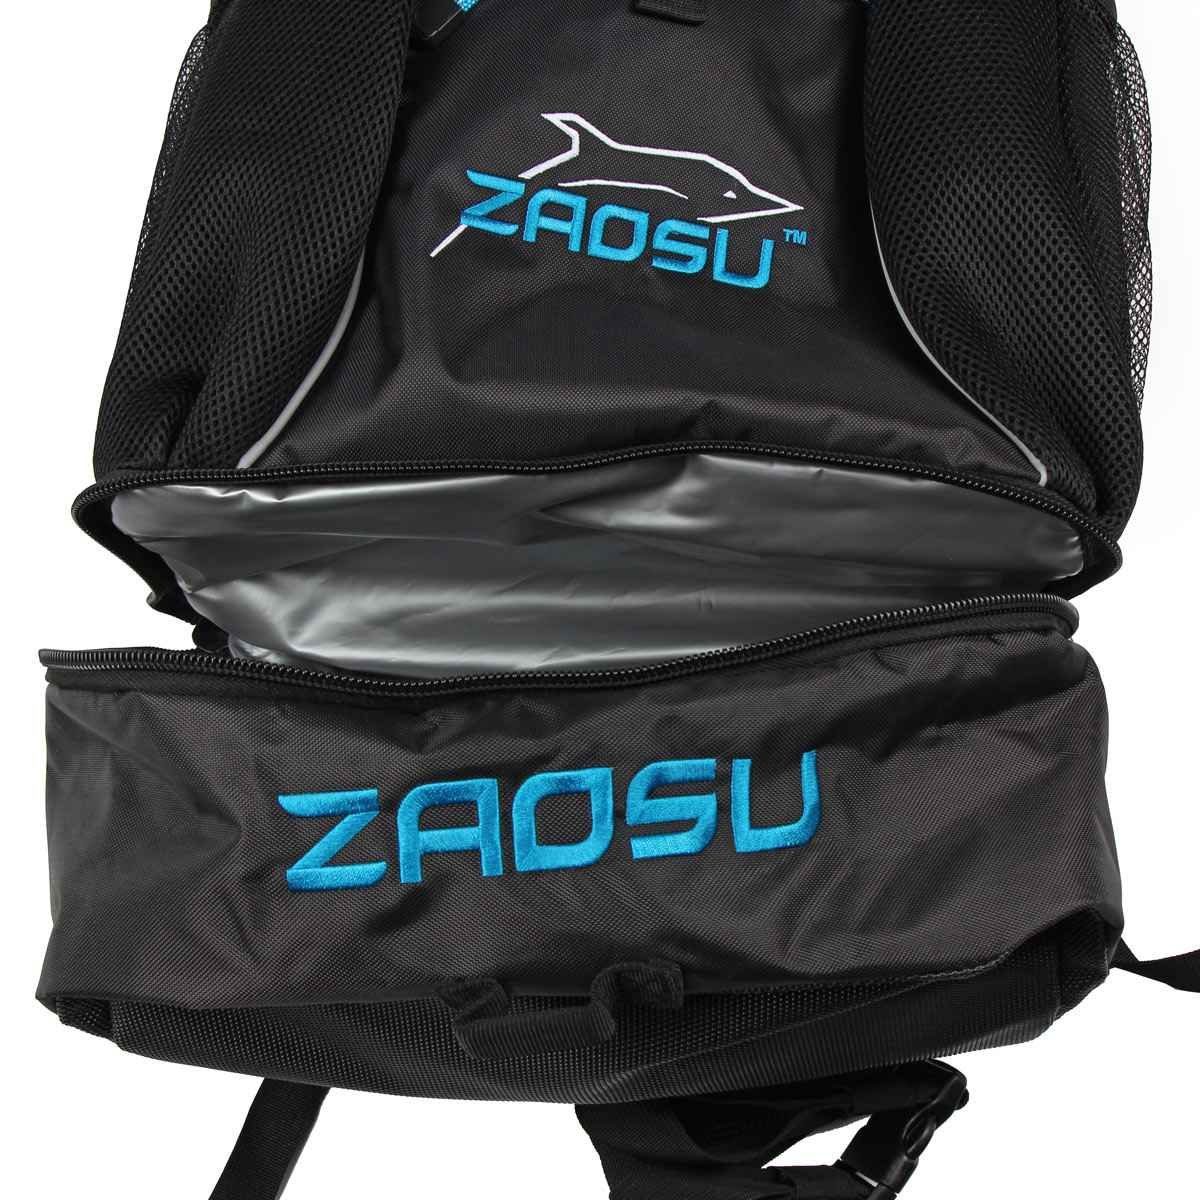 blau Bag Transition Sportrucksack ZAOSU